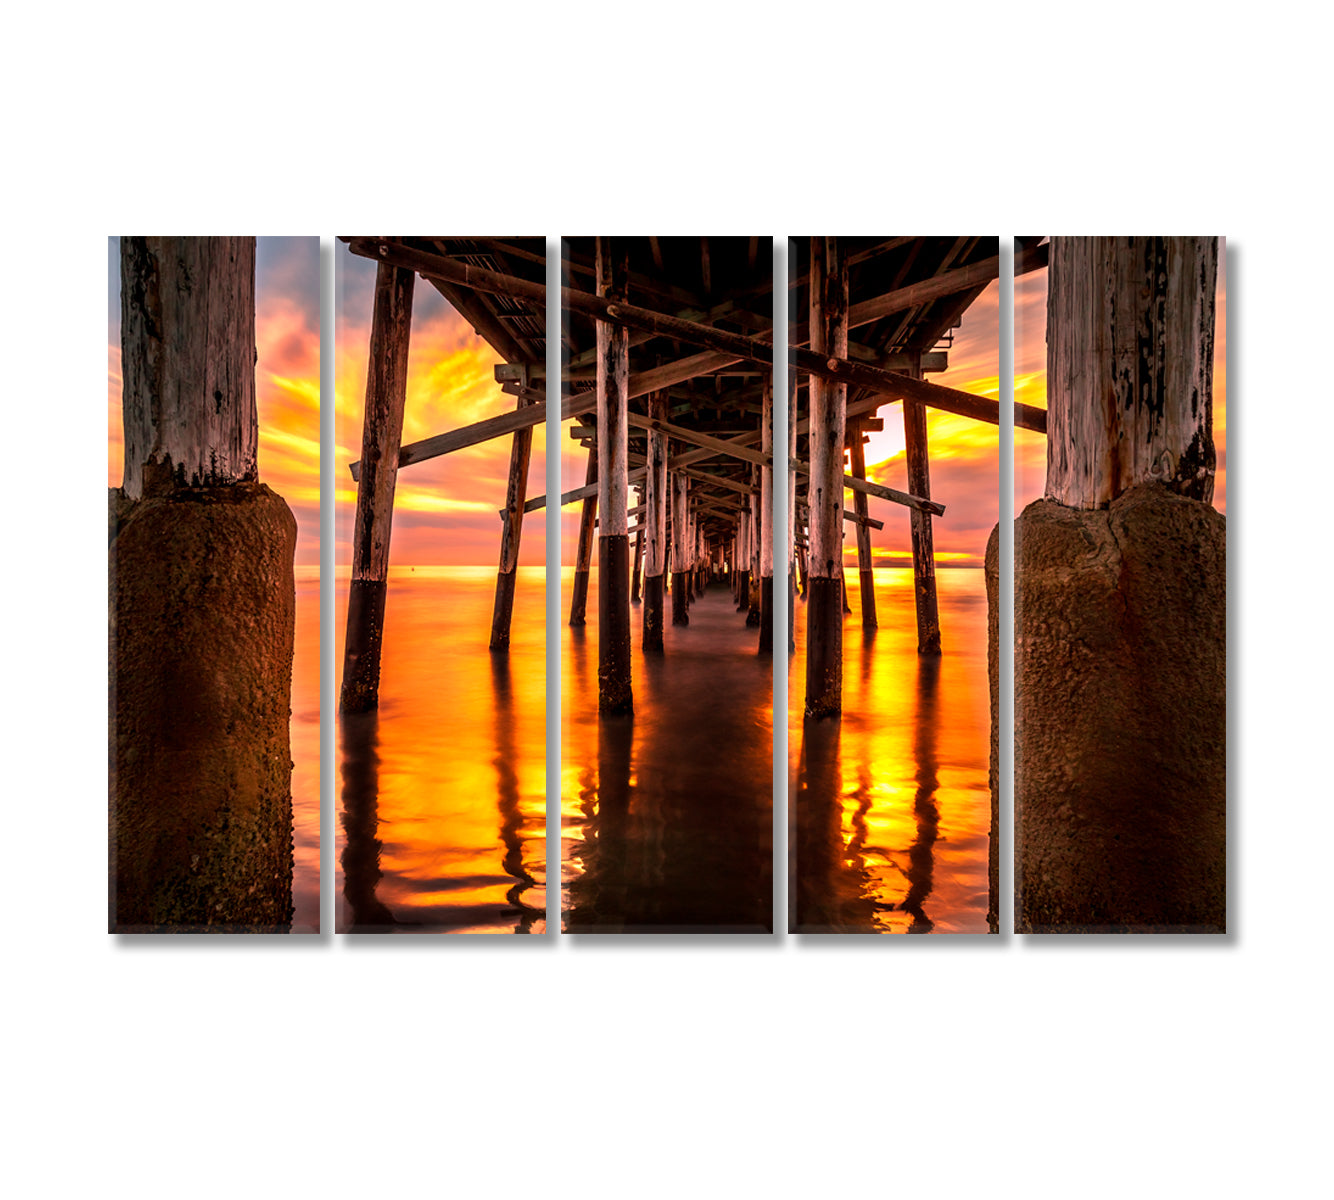 Under the Newport Beach Pier at Sunset Canvas Print-Canvas Print-CetArt-5 Panels-36x24 inches-CetArt